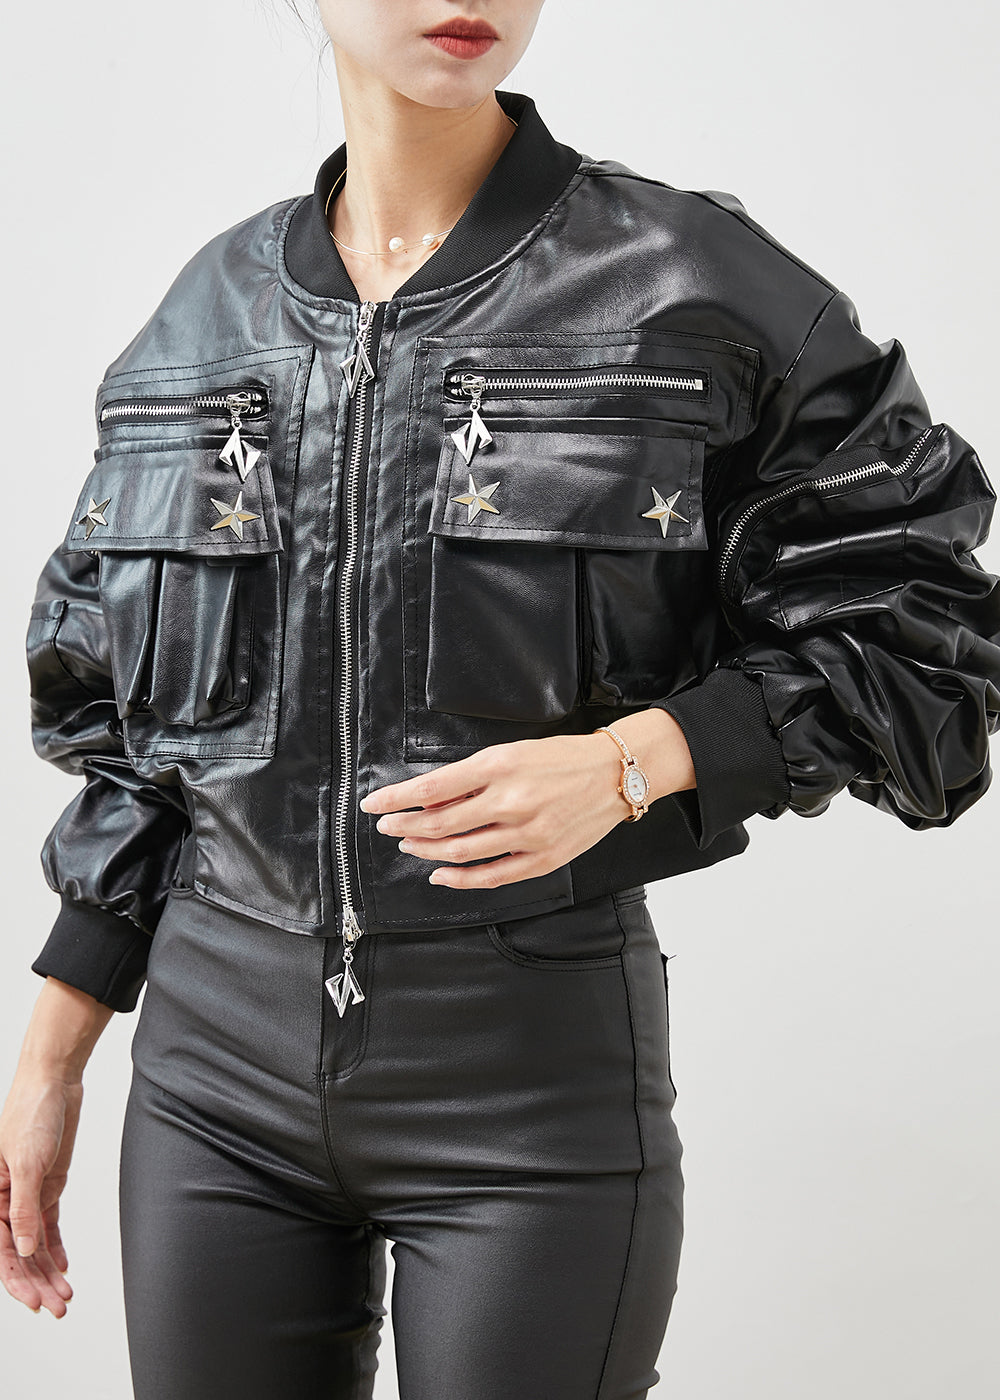 Fashion Black Zip Up Rivet Faux Leather Jackets Spring